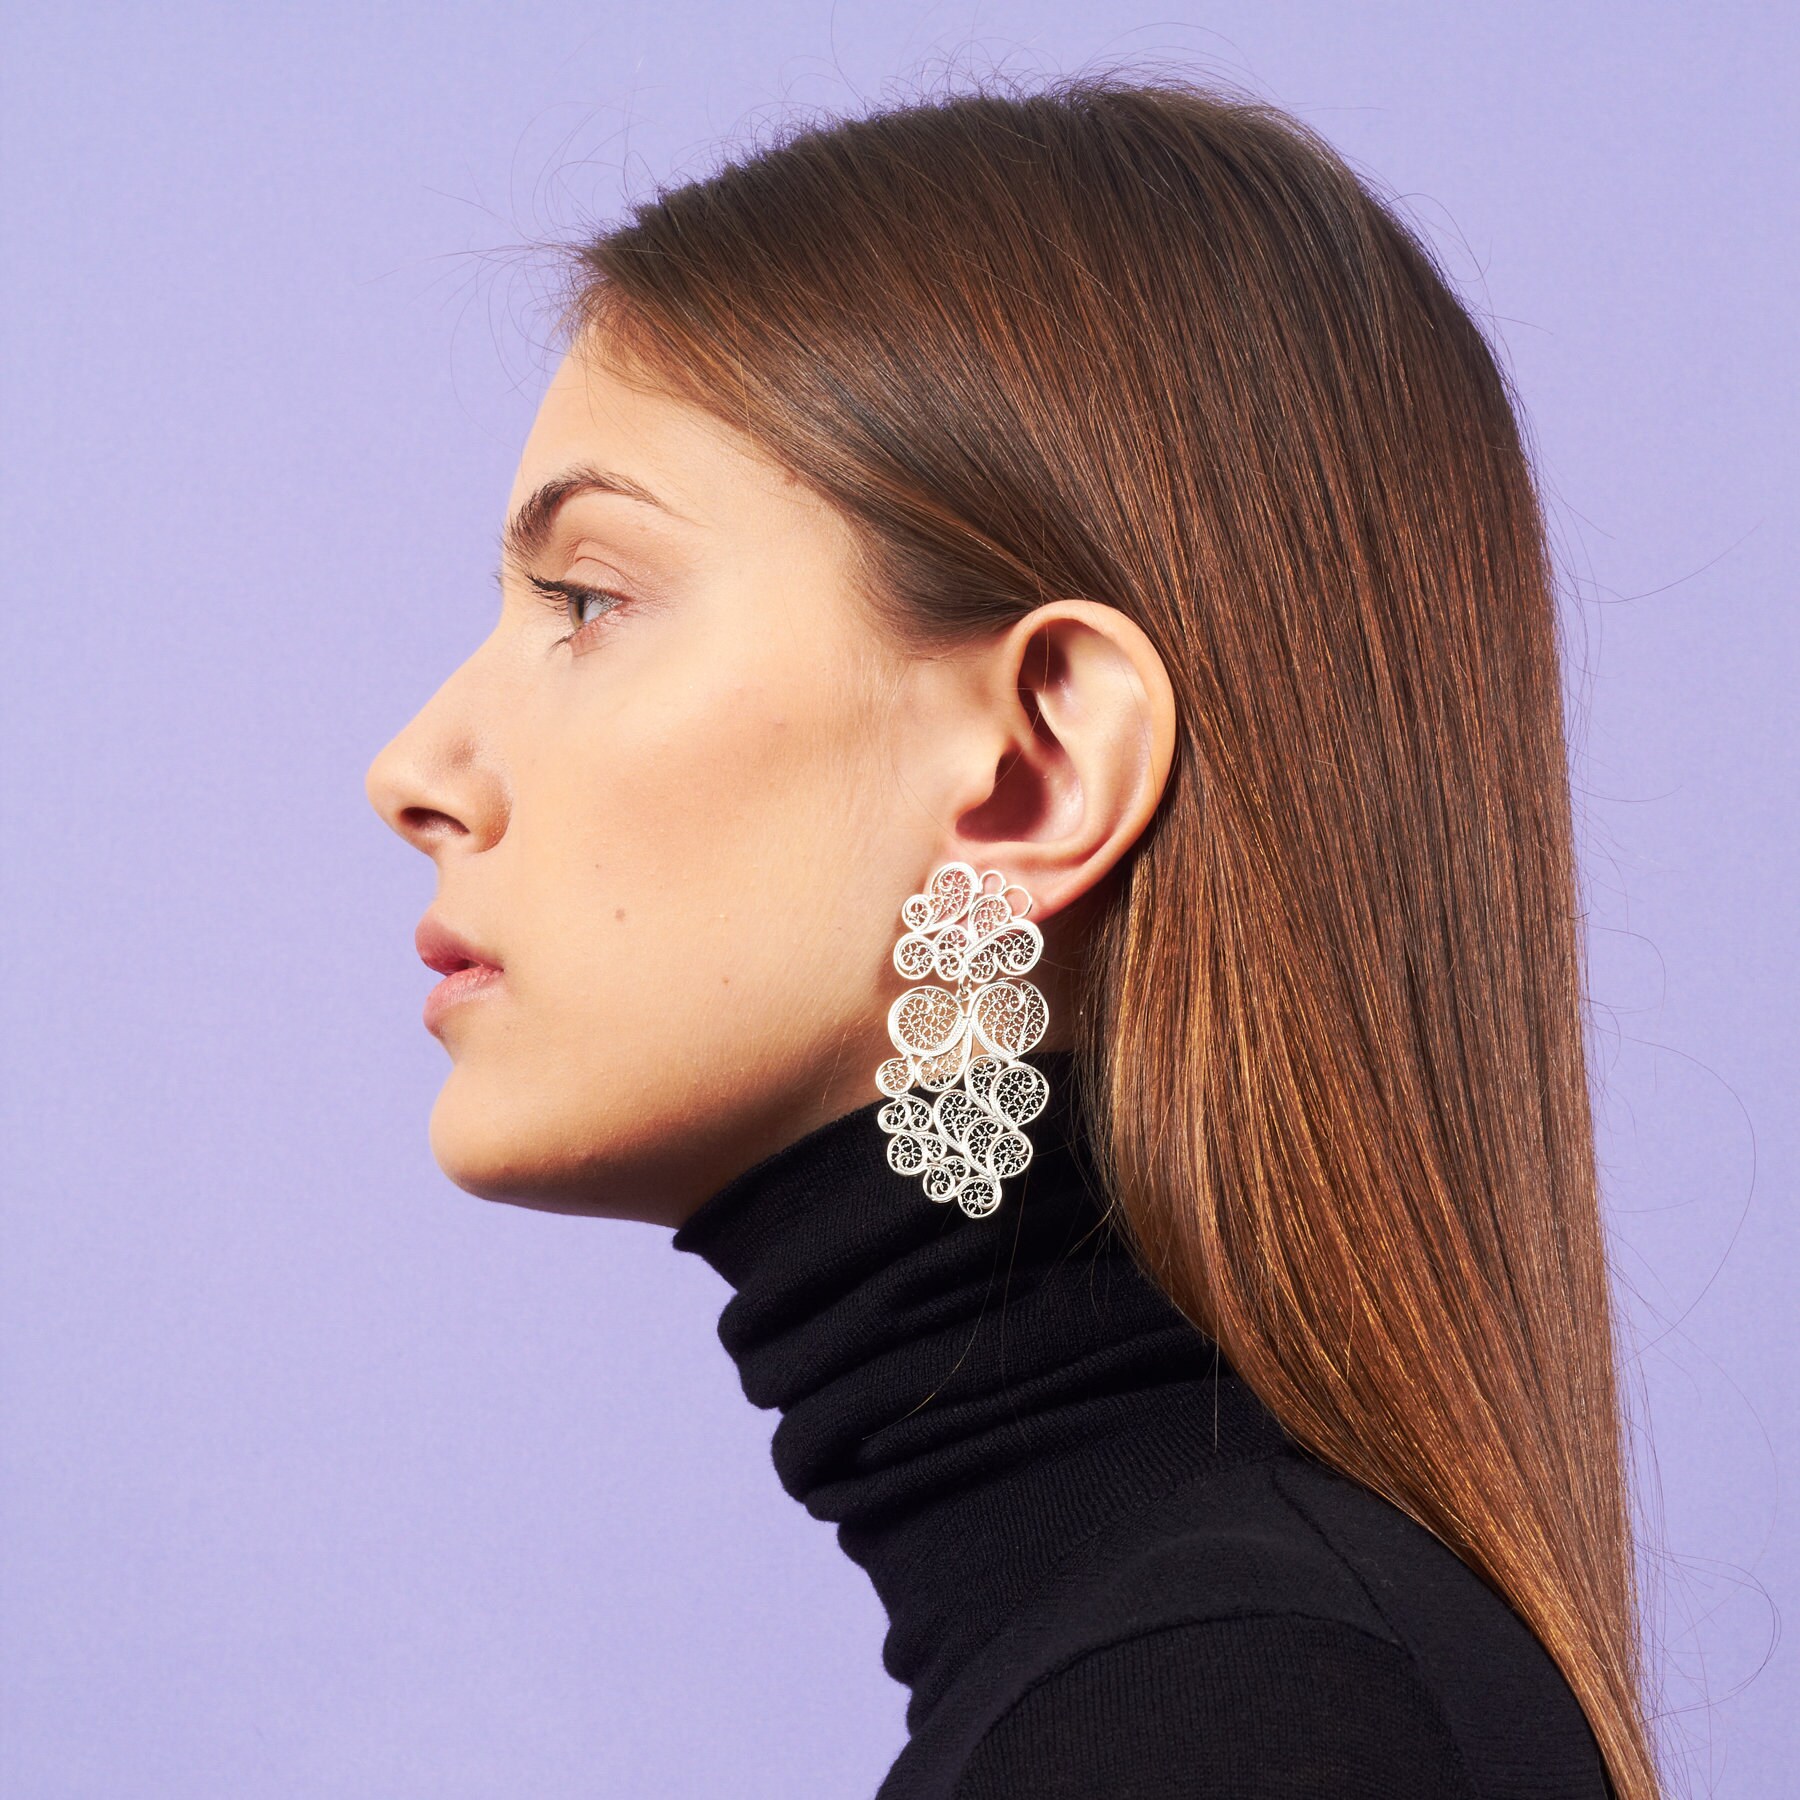 The future looks bright dramatic drop star earrings